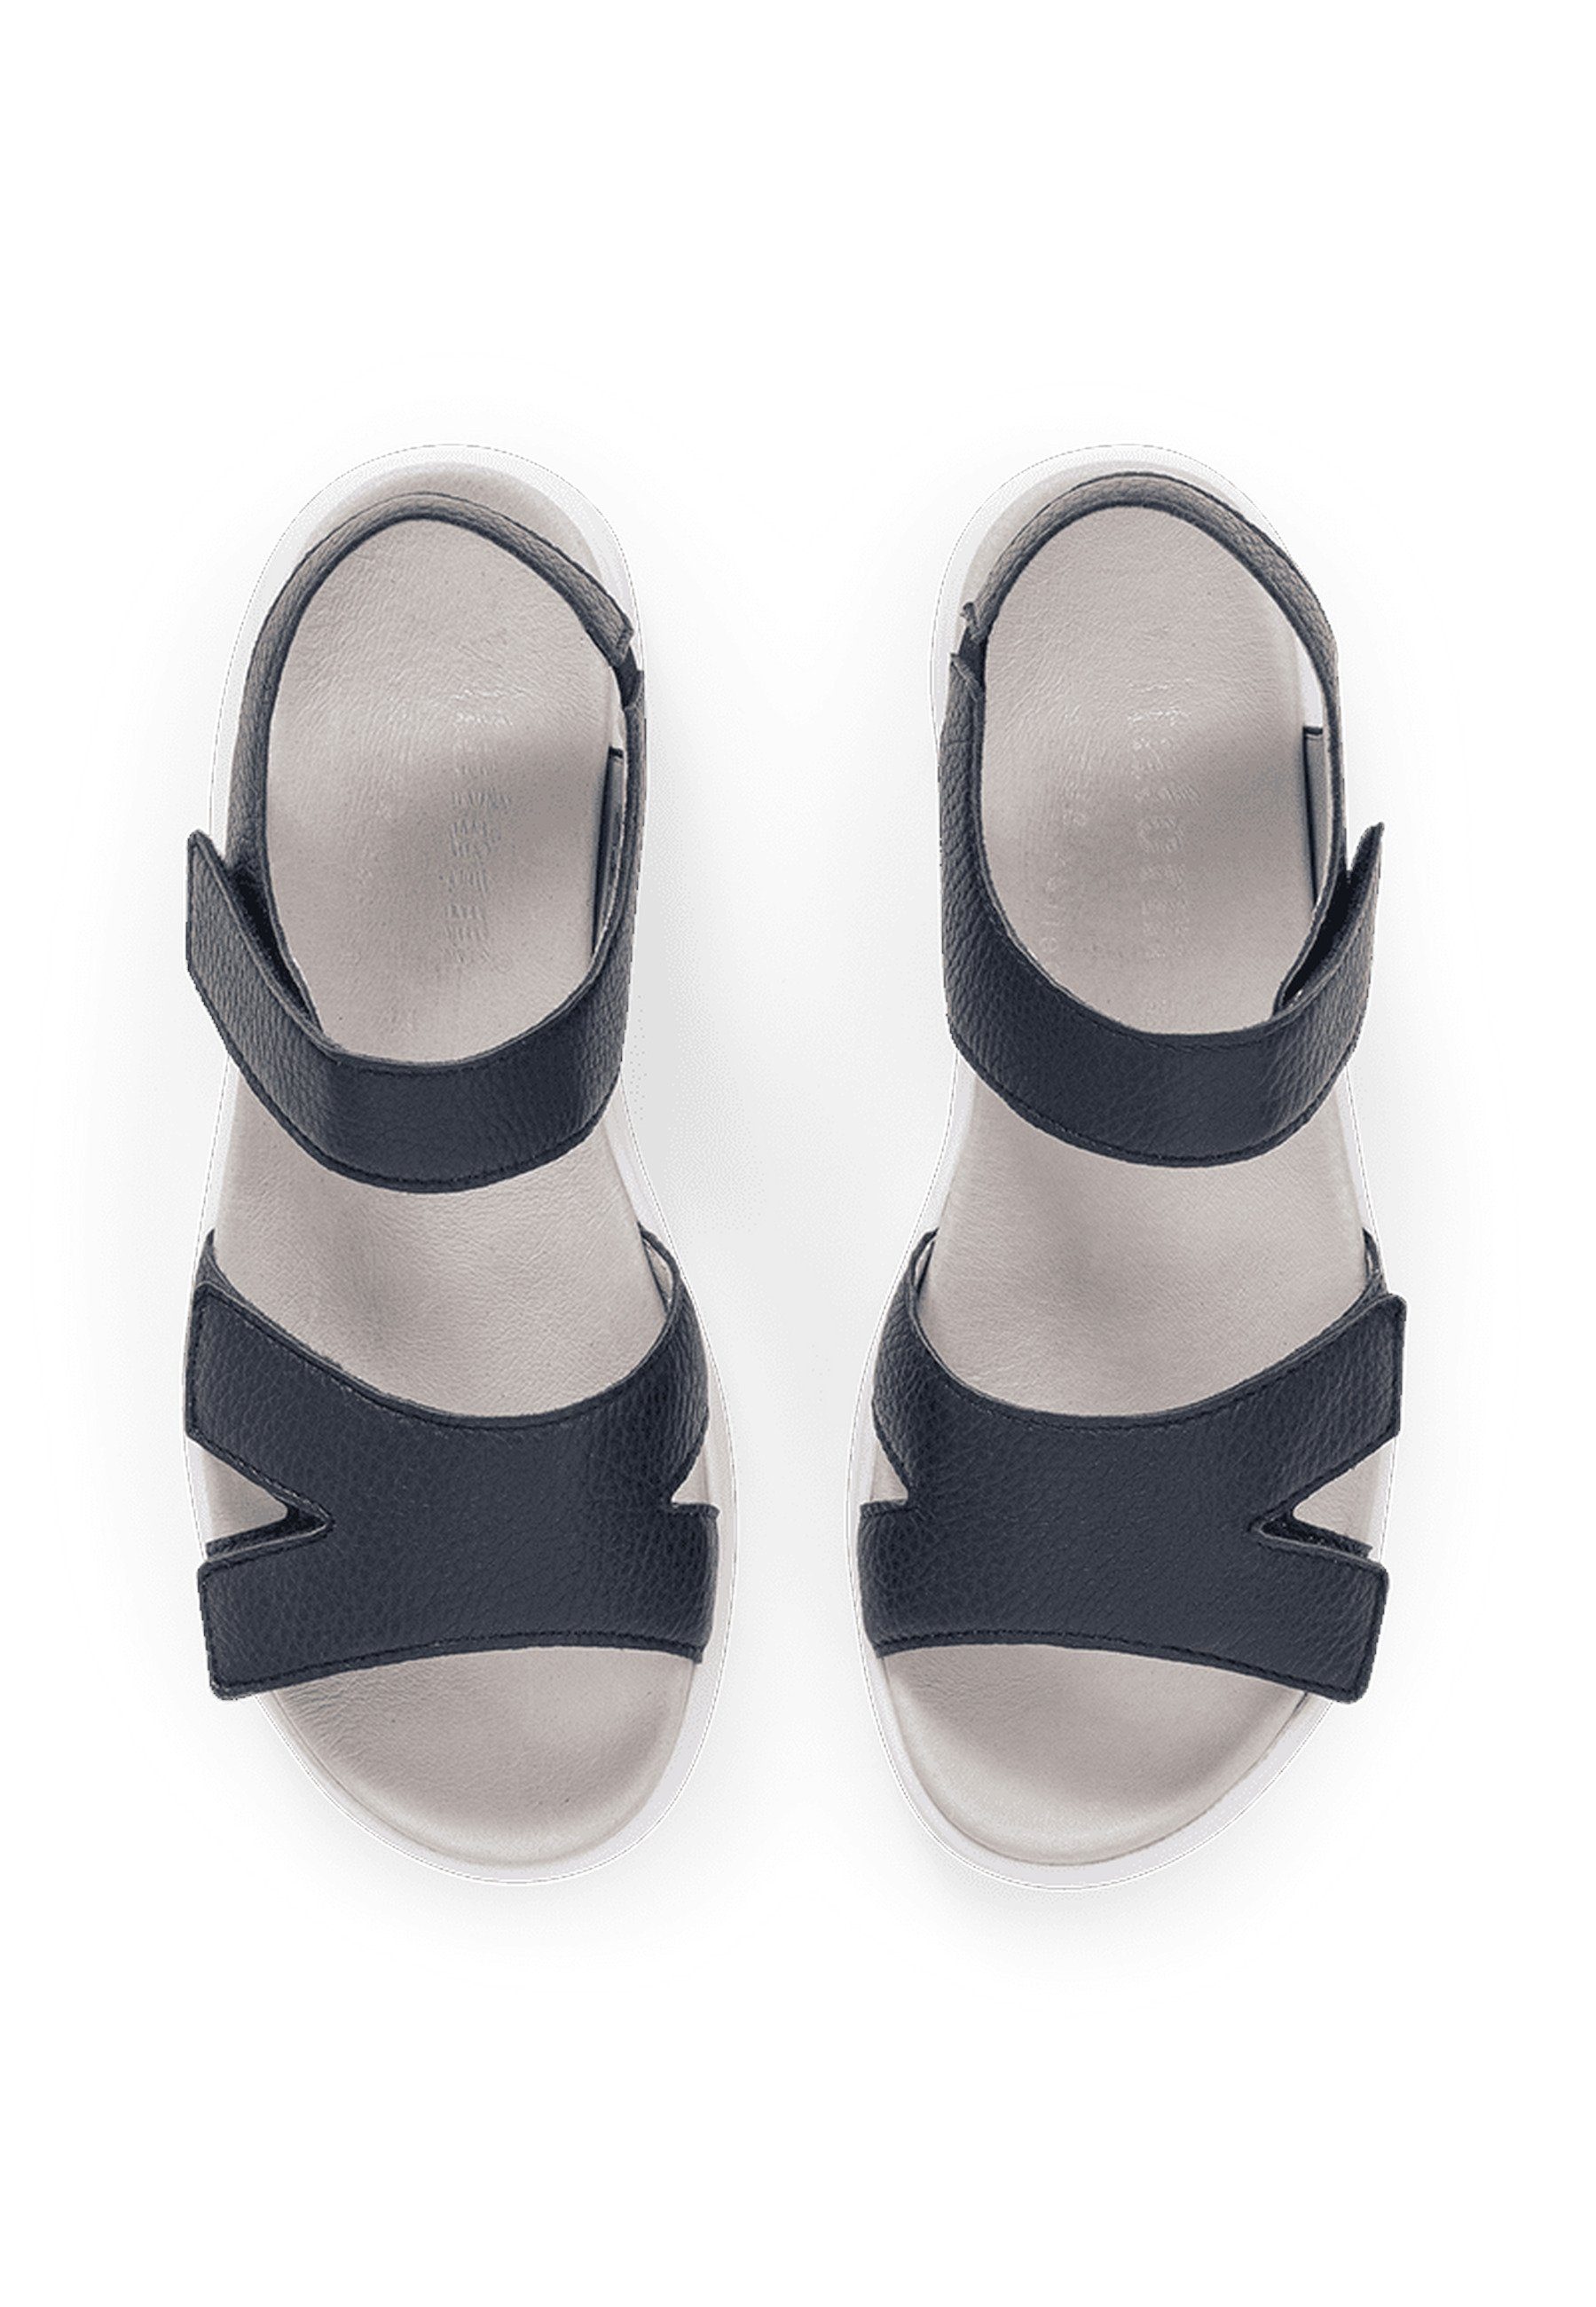 Hirschleder Sandale Sandale marine Damenschuhe vitaform